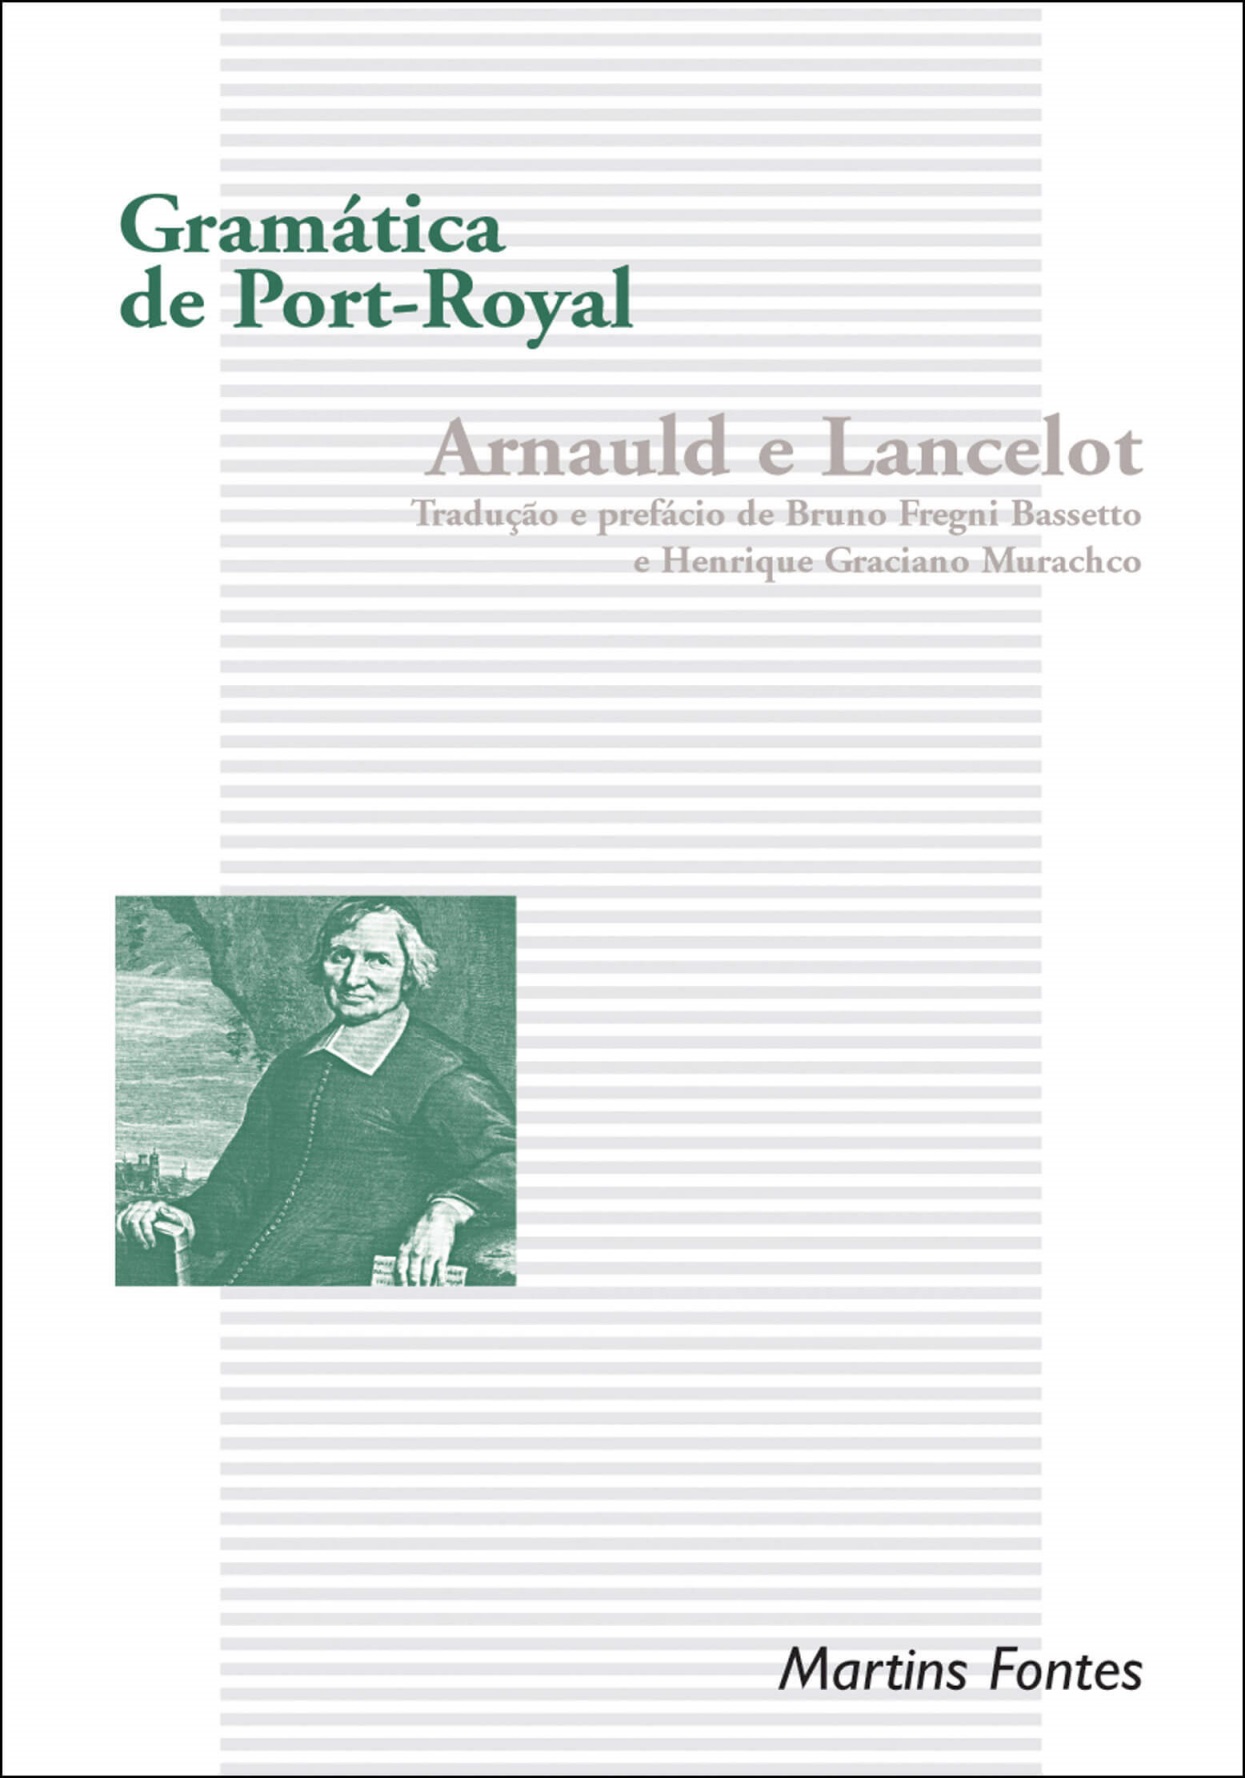 Gramática de Port-Royal